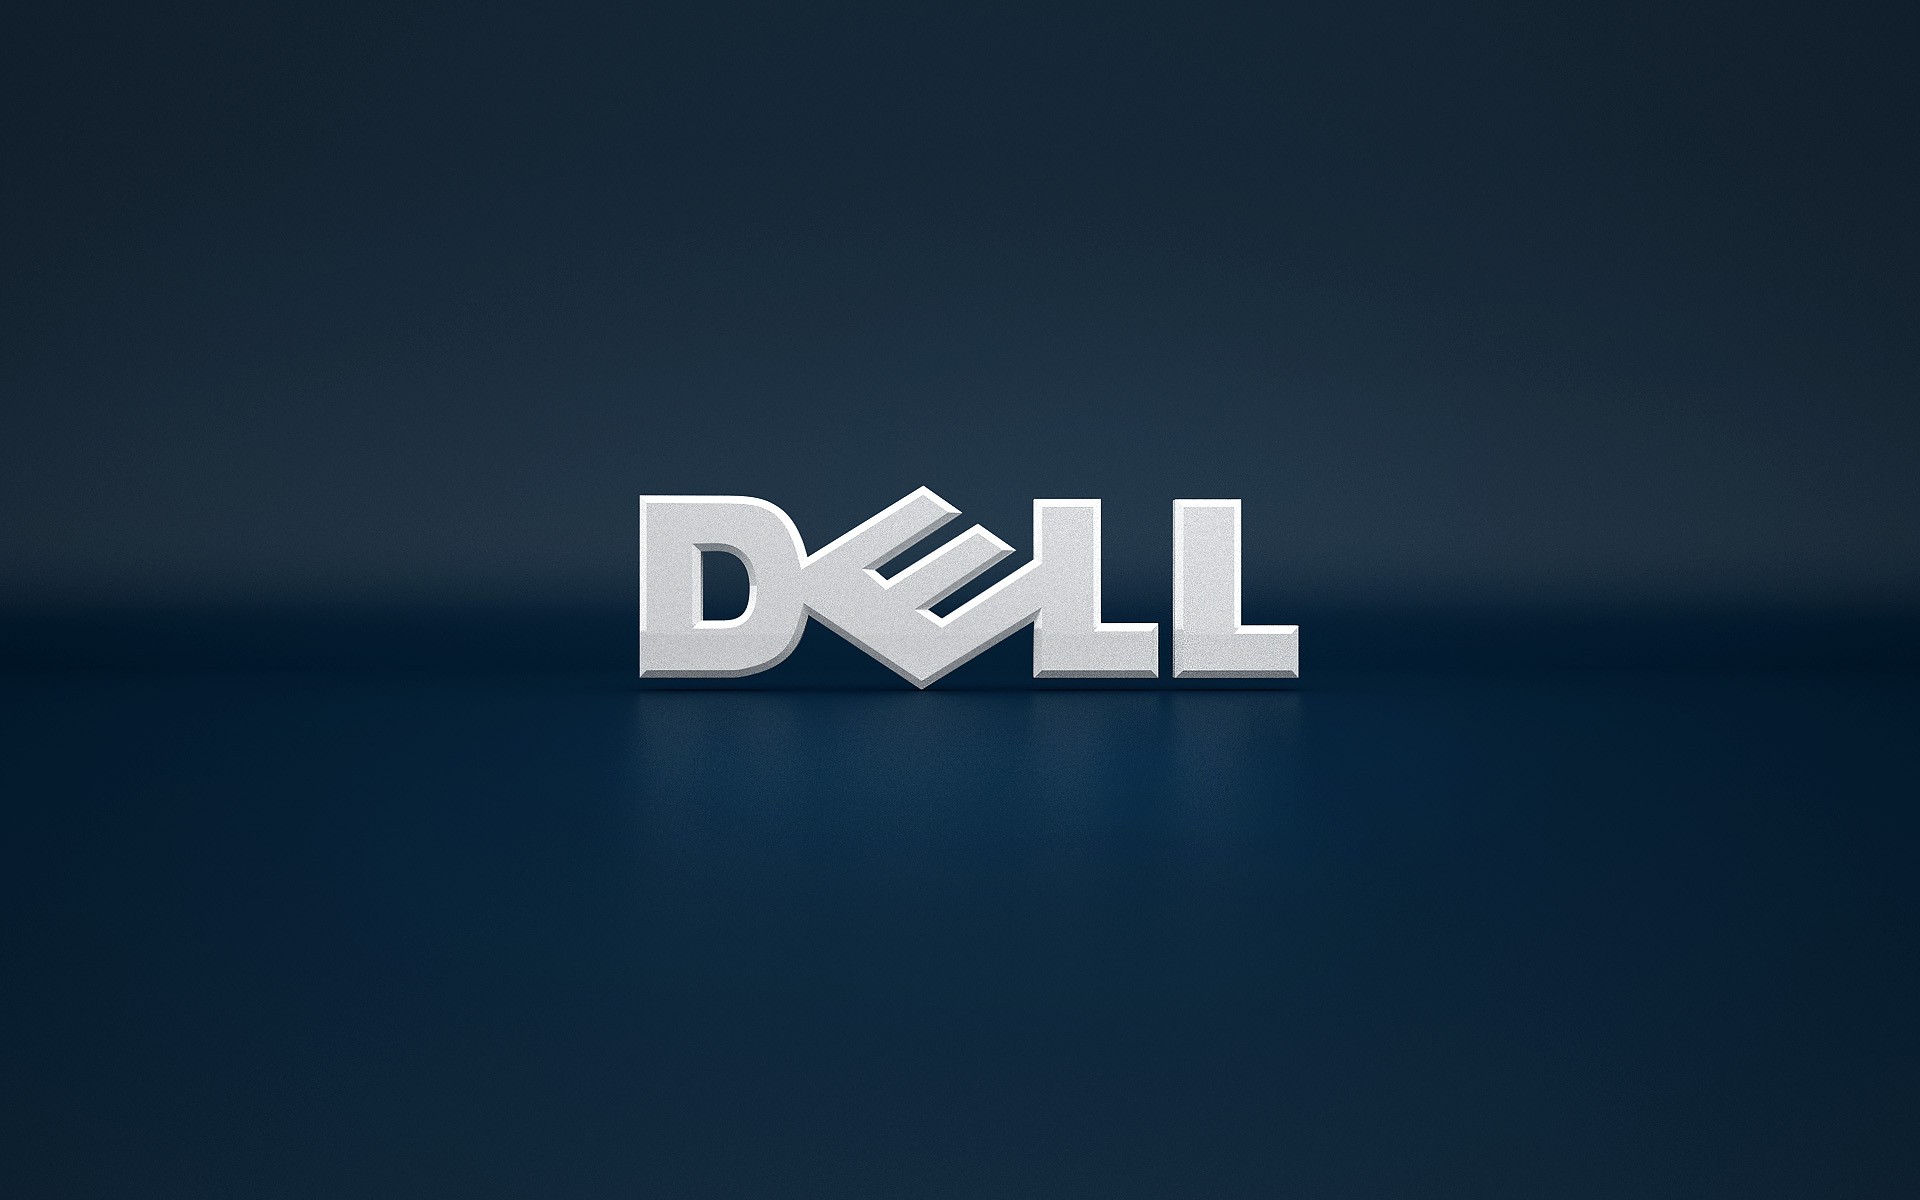 General 1920x1200 Dell logo blue background hardware